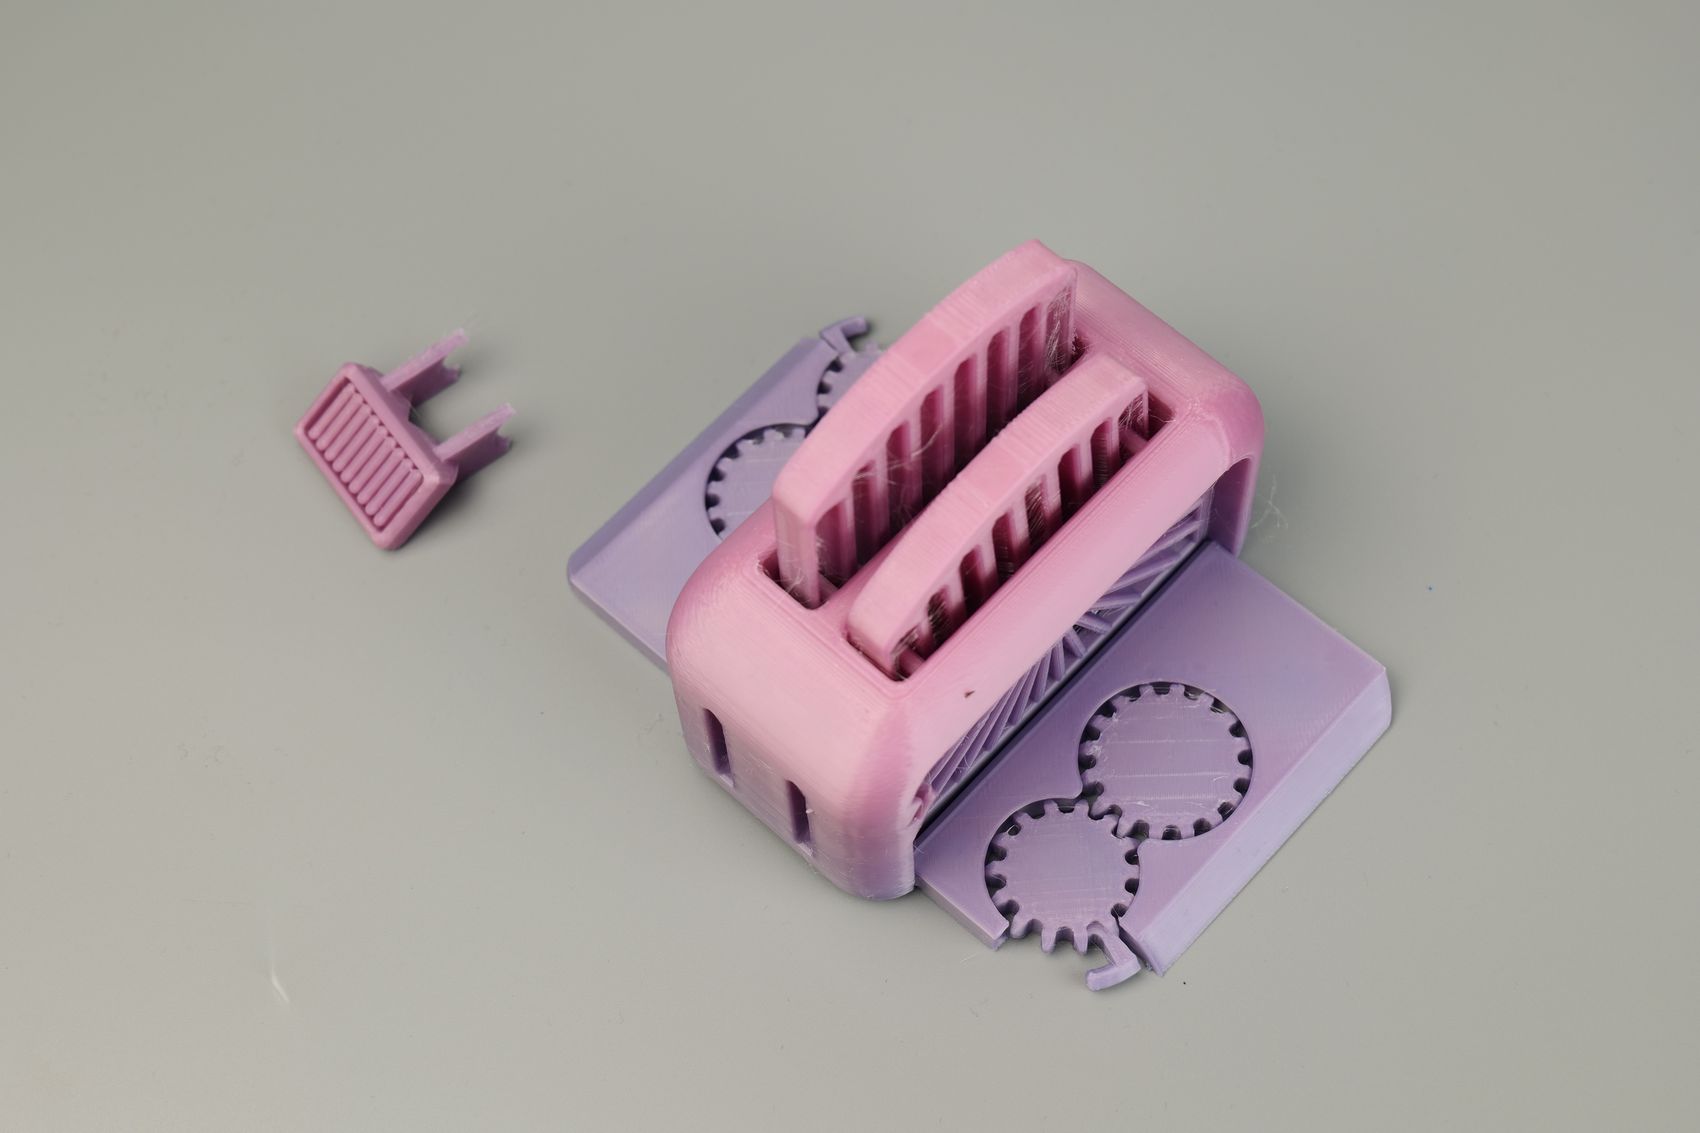 Torture Toaster PLA print on AnkerMake M5C Review5 | AnkerMake M5C Review